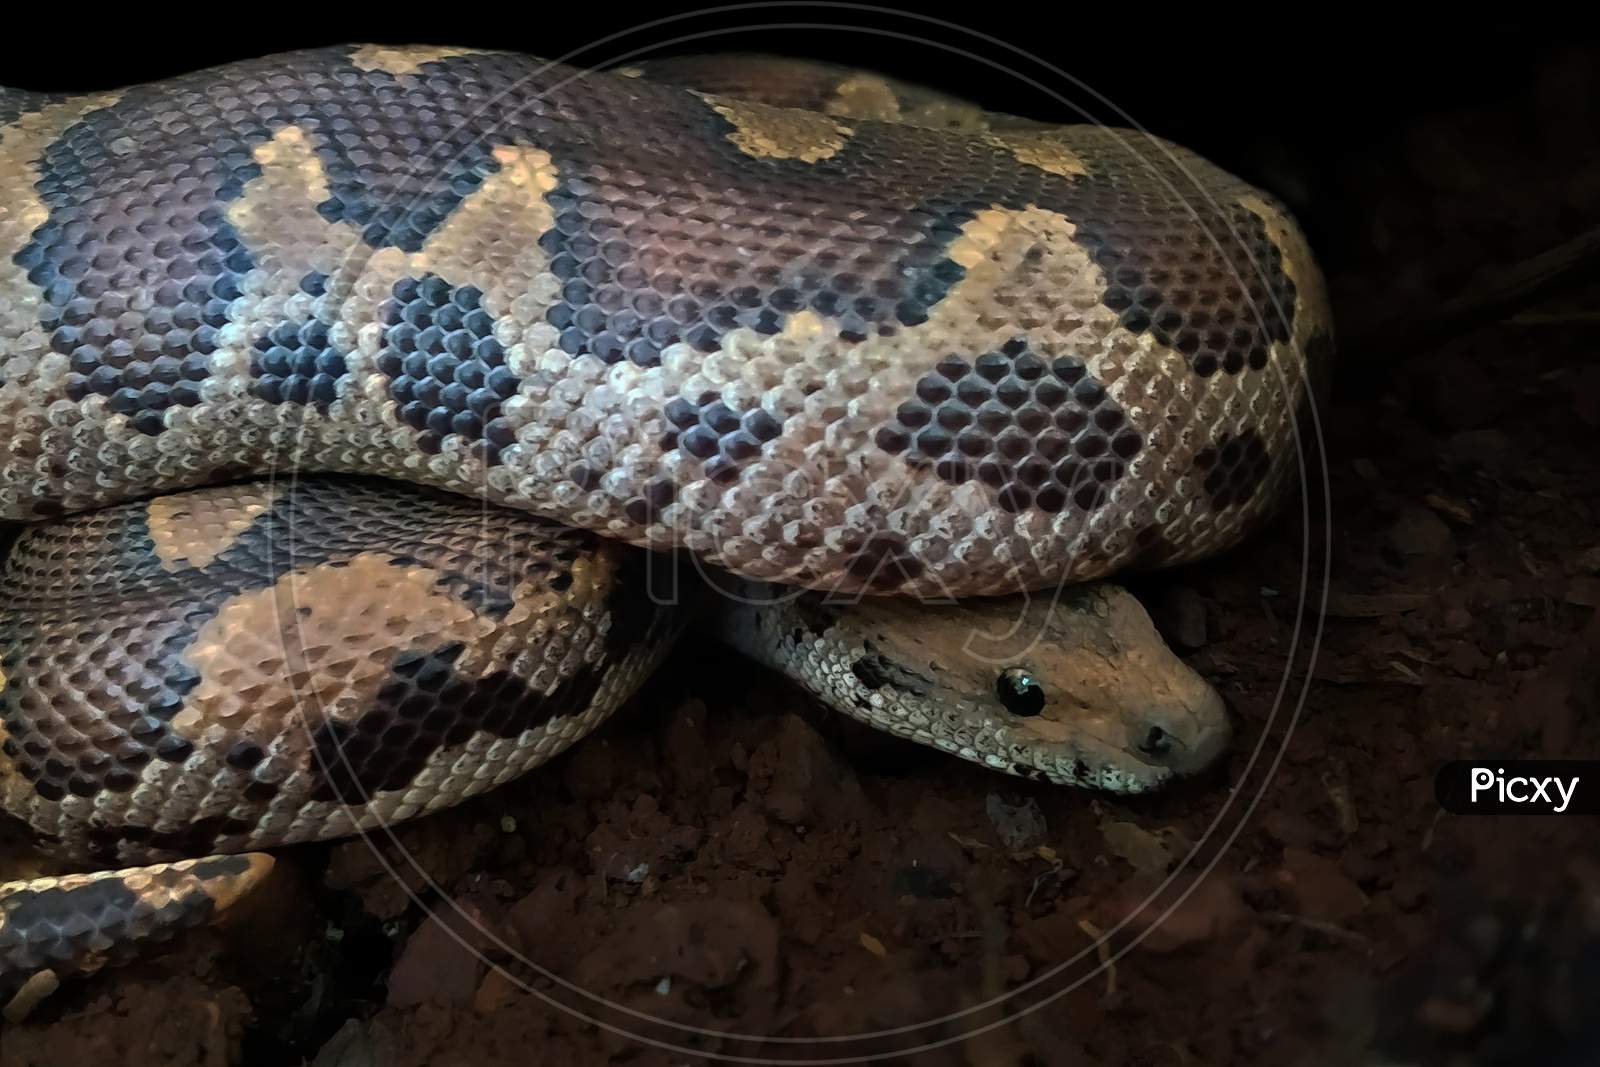 Common Sand boa snake